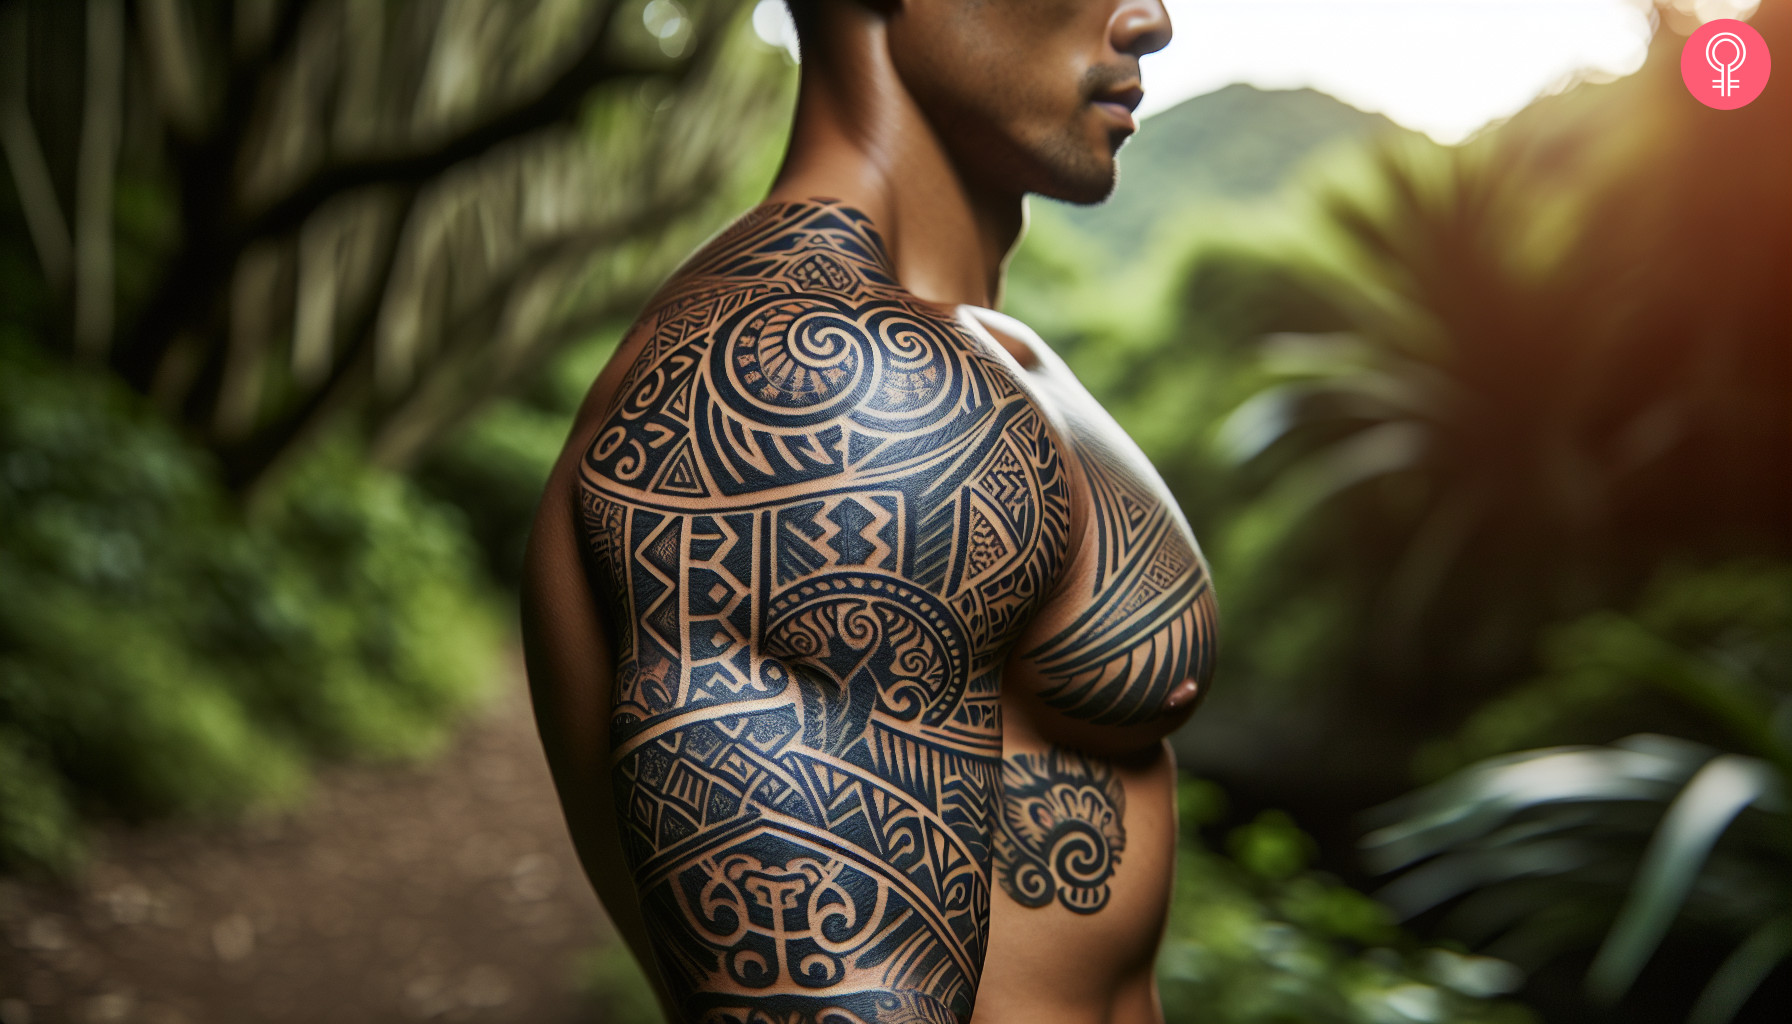 Ocean maori tattoo design on the upper arm of a man